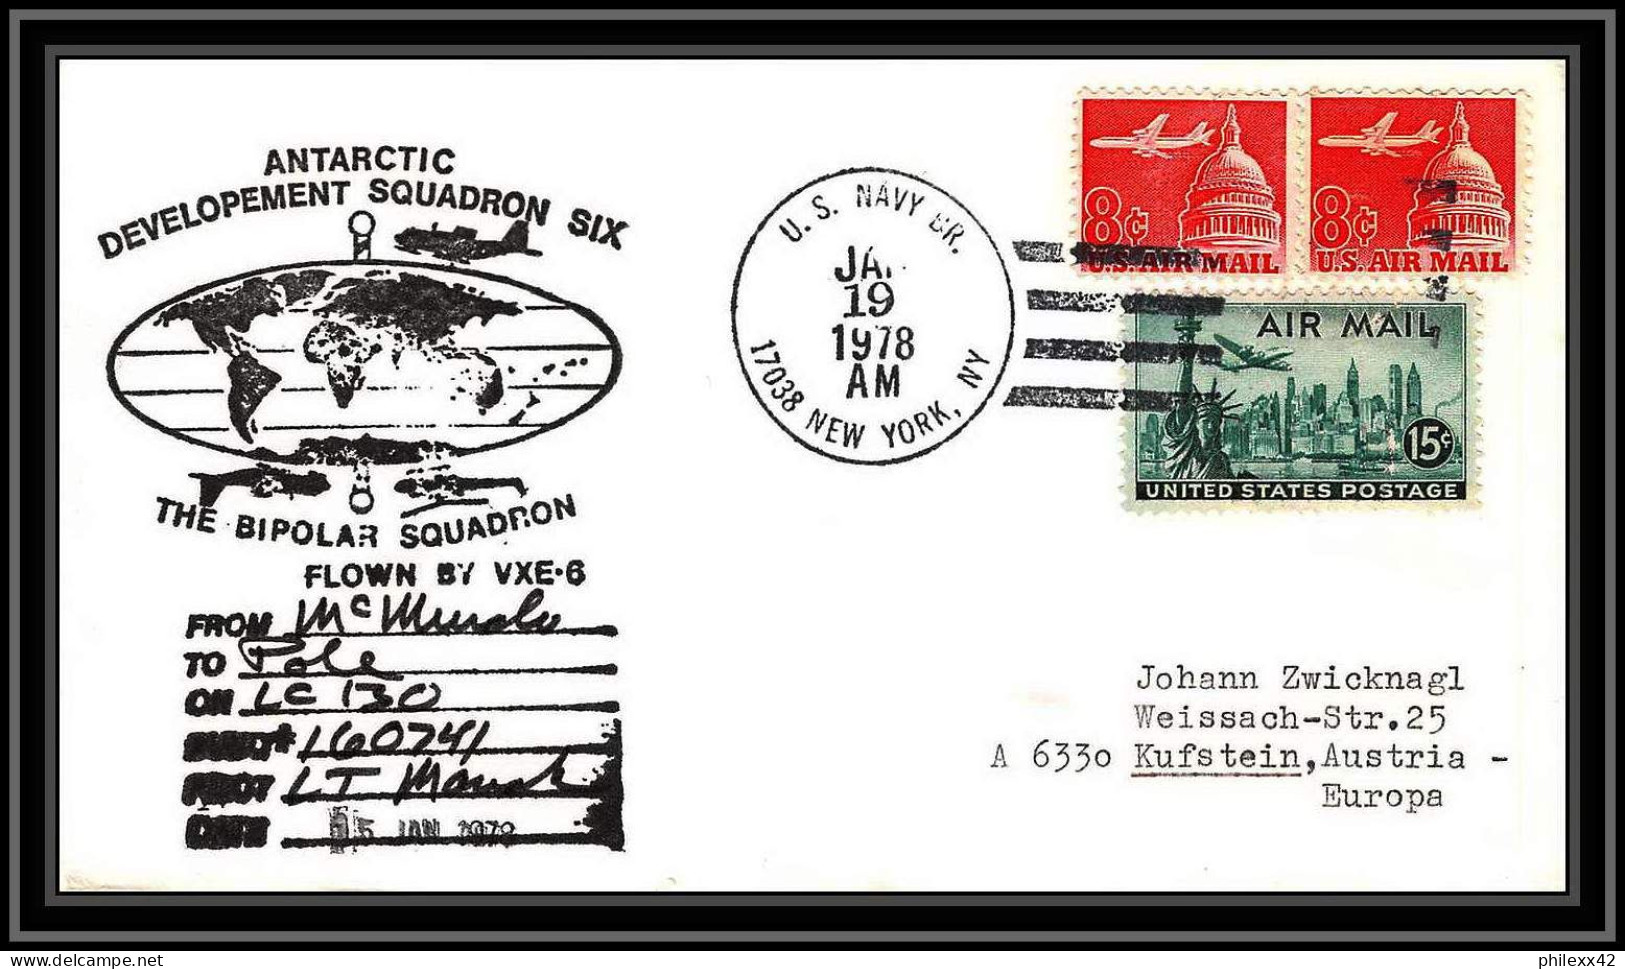 1007 Antarctic Polar Antarctica USA Lettre (cover) 19/01/1978 BIPolar SQUADRON - Research Stations